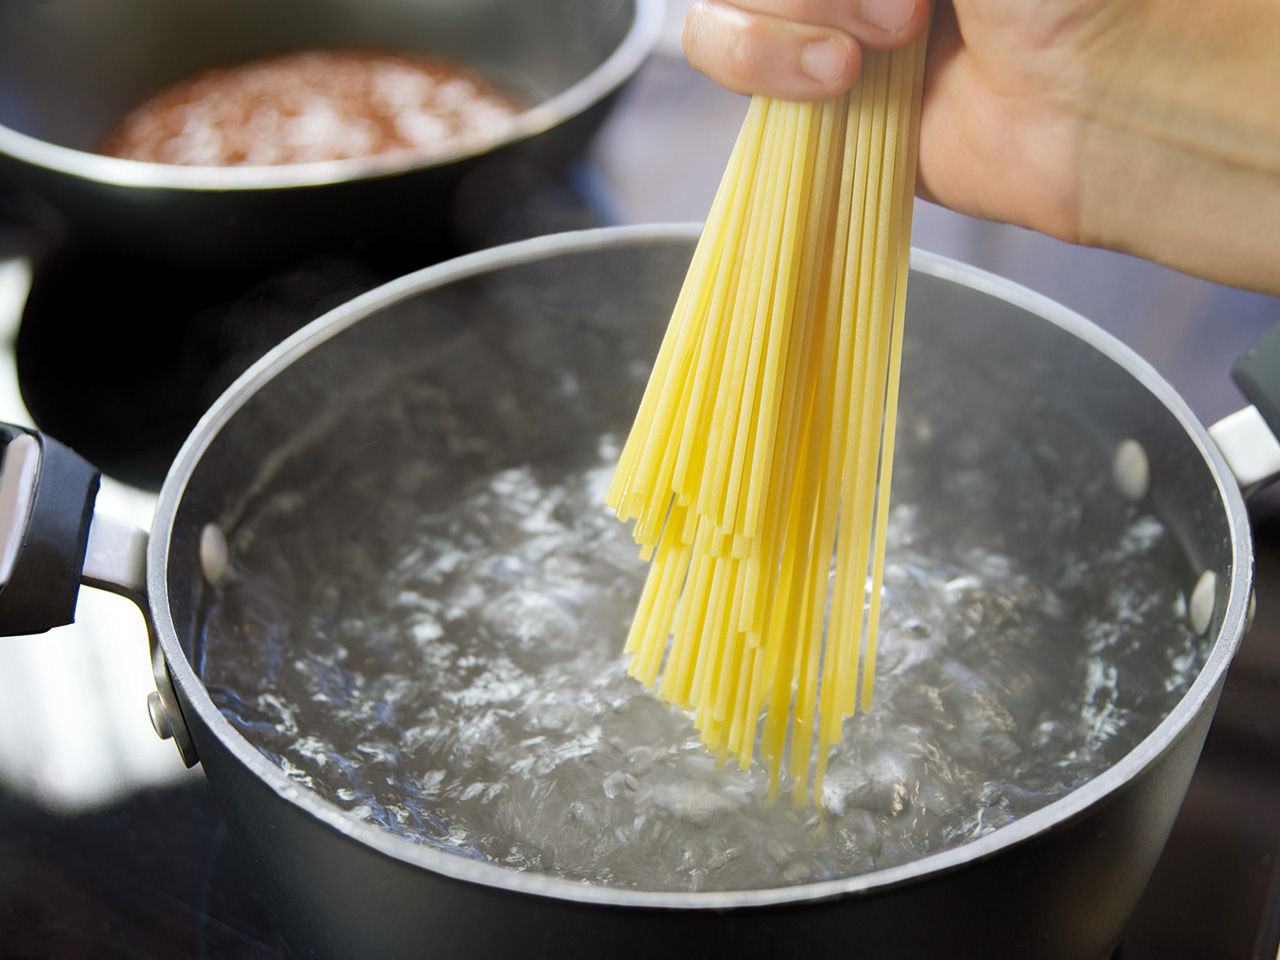 Spaghetti in boiled water